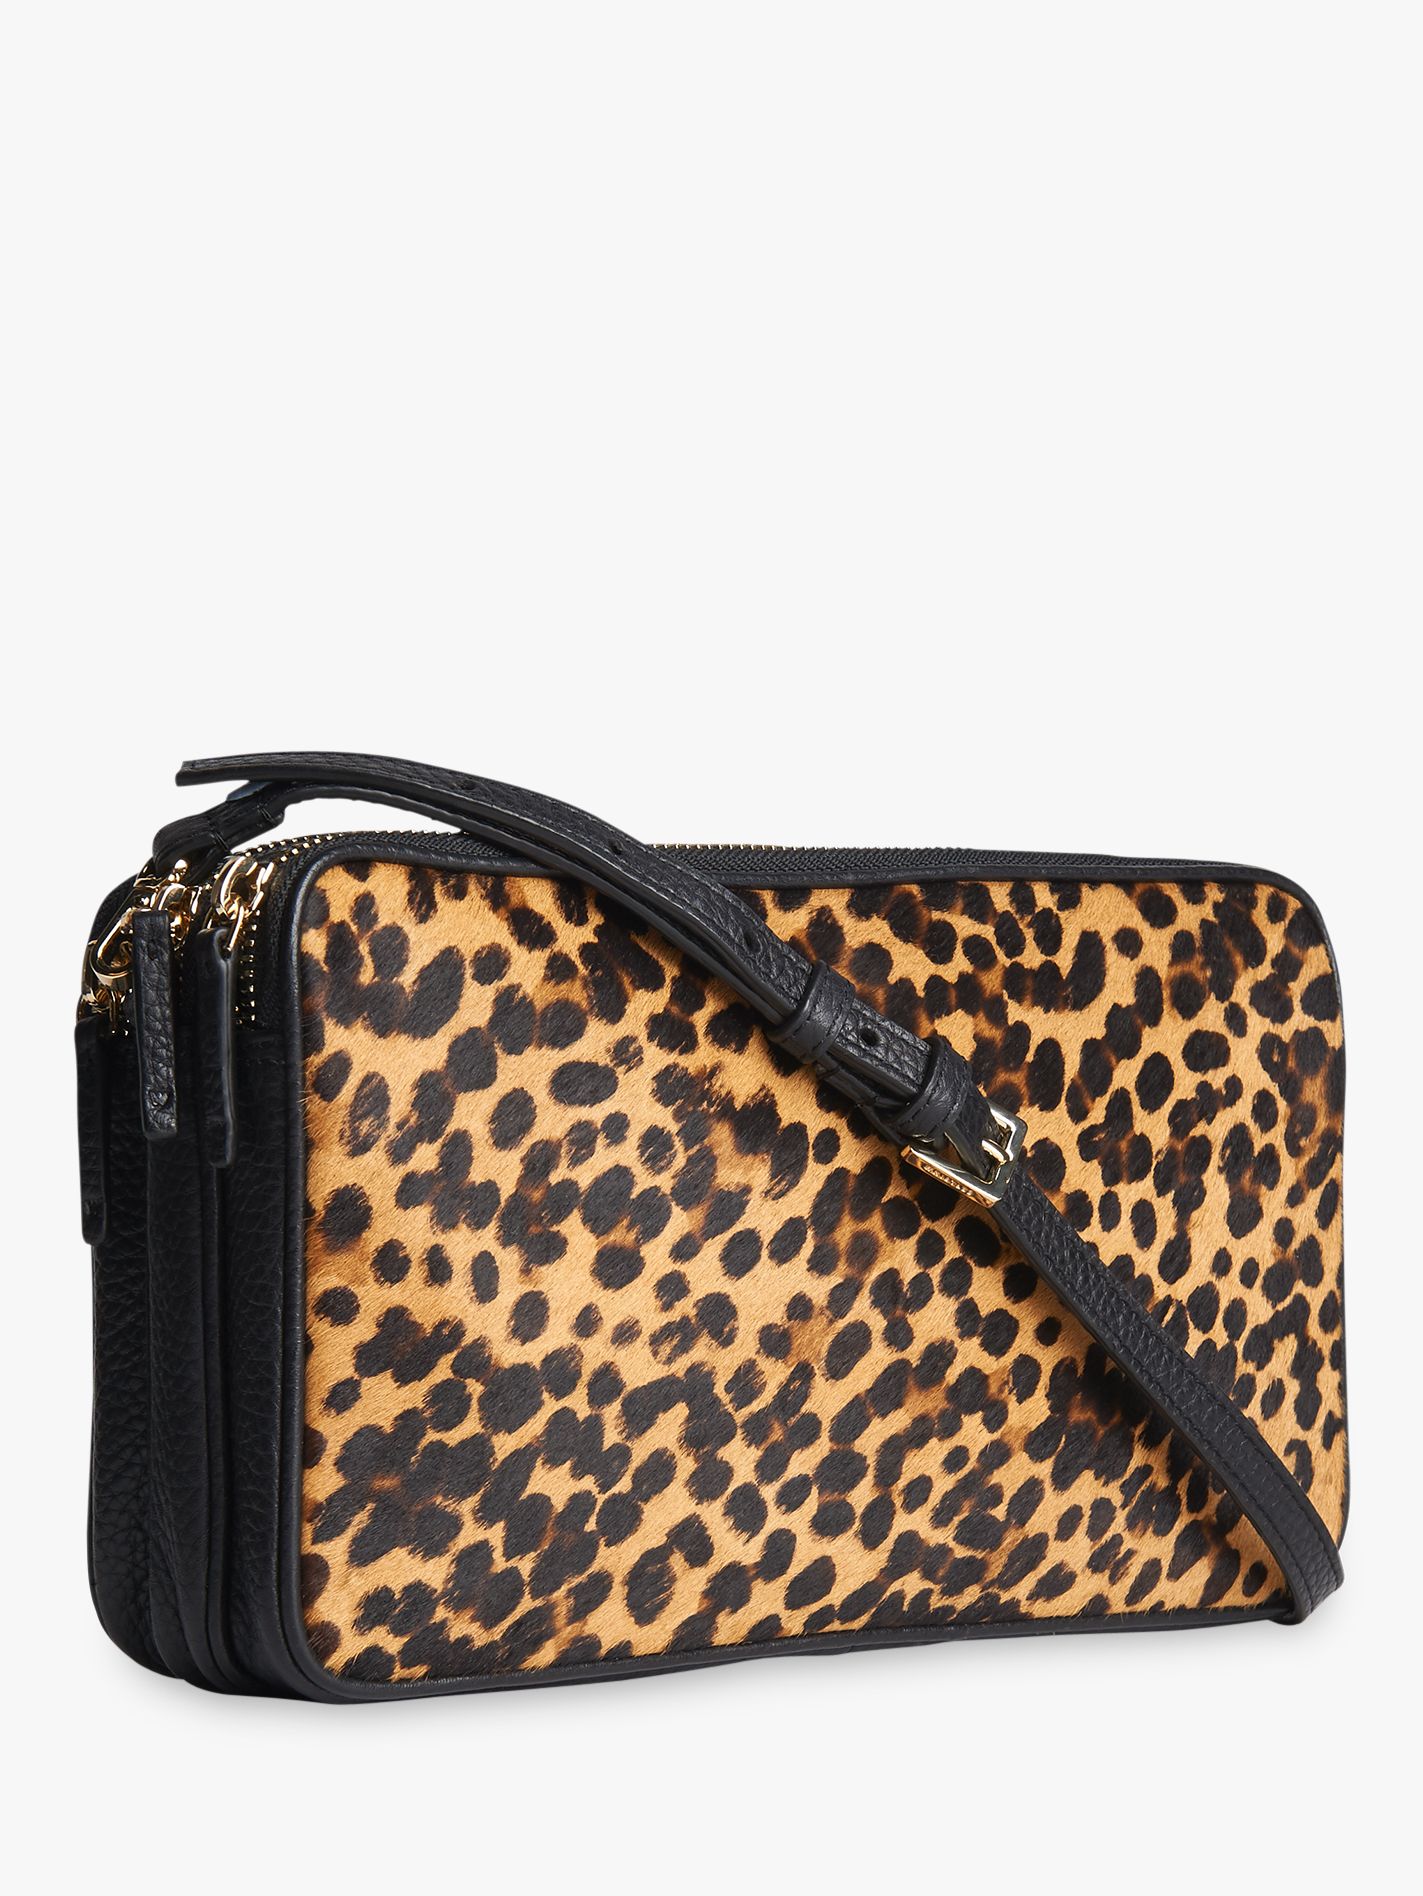 Whistles Cornelia Leather Triple Zip Bag, Leopard Print at John Lewis & Partners